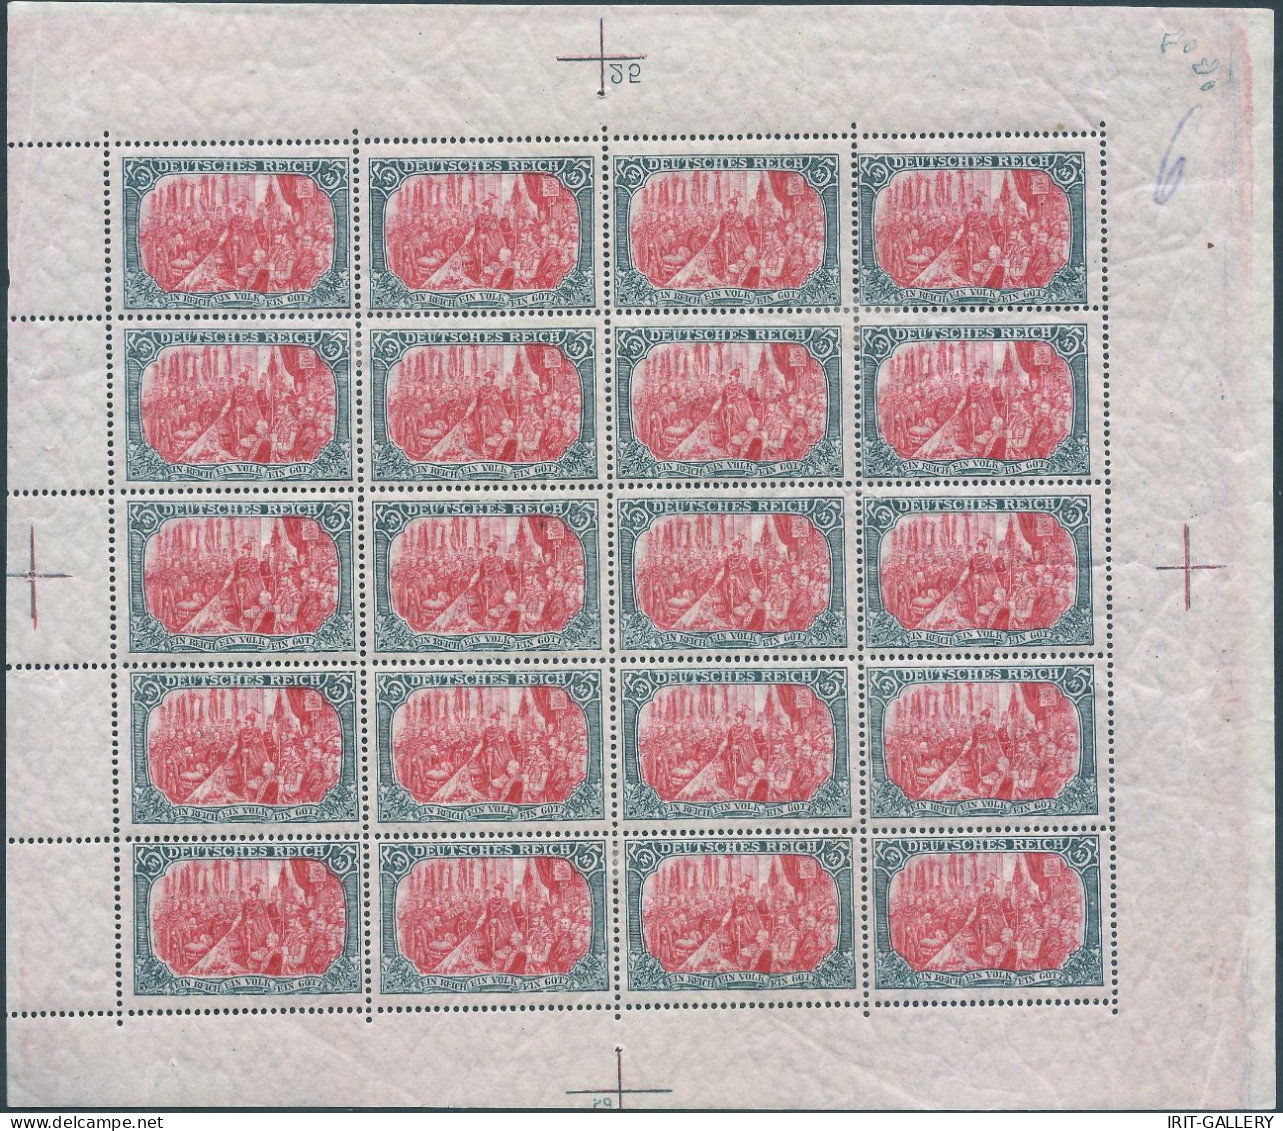 Germany-Deutschland,German Empire,1918 Sheet With 20 Pieces 5Mk. Mint - Original Gum , Michel 97BII - RARITY! - Unused Stamps